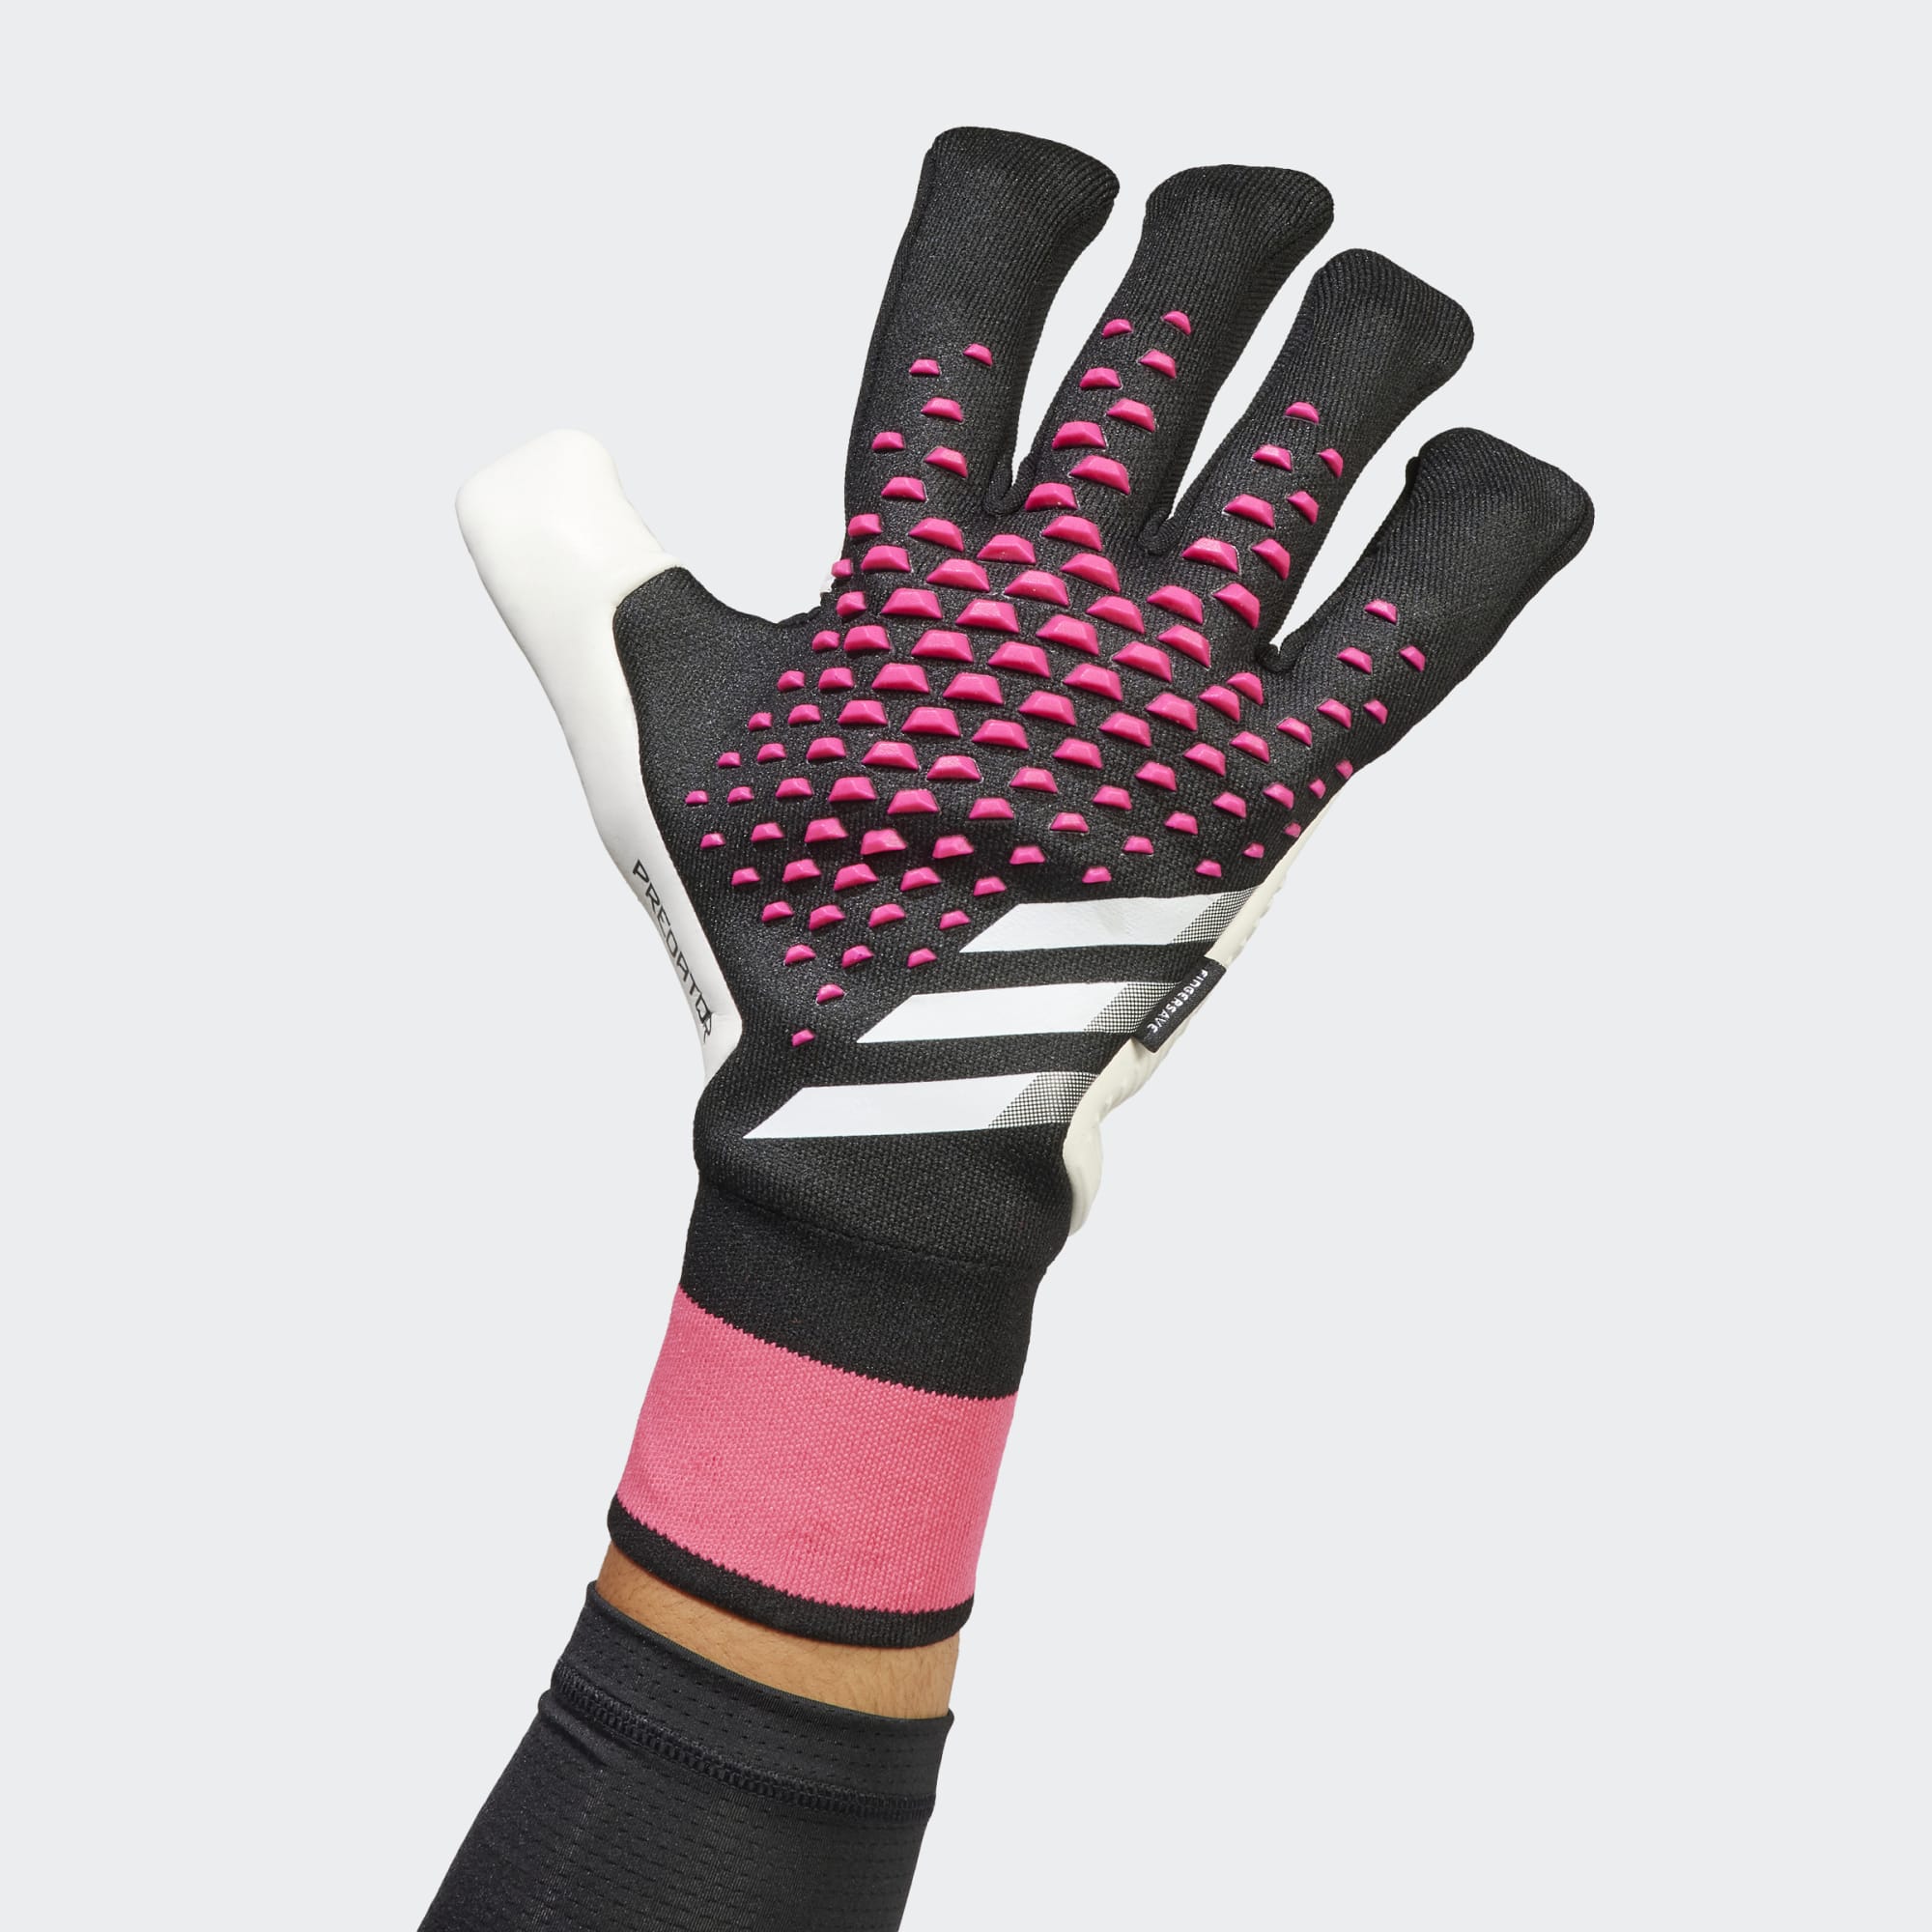 lluvia Sistemáticamente Atravesar stefanssoccer.com:adidas Predator GL Pro Finger Save GK Glove - Black / Pink